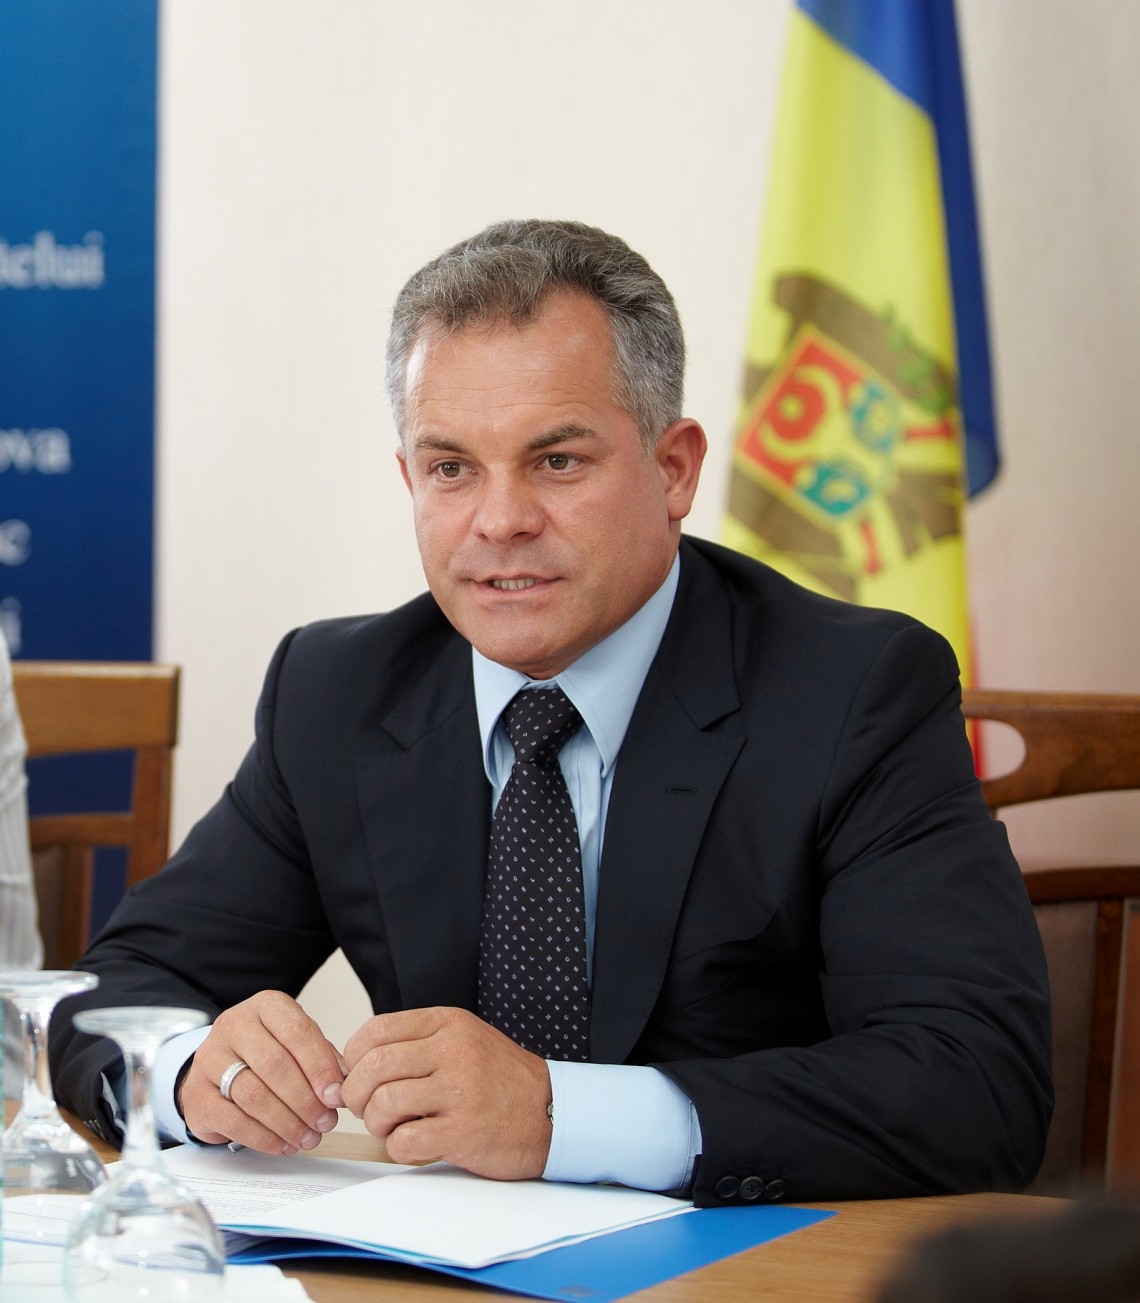 Foto arhivă. Vlad Plahotniuc - Vlad Plahotniuc, Prim-vicepreședinte al Parlamentului Republicii Moldova, CC BY 2.0, https://commons.wikimedia.org